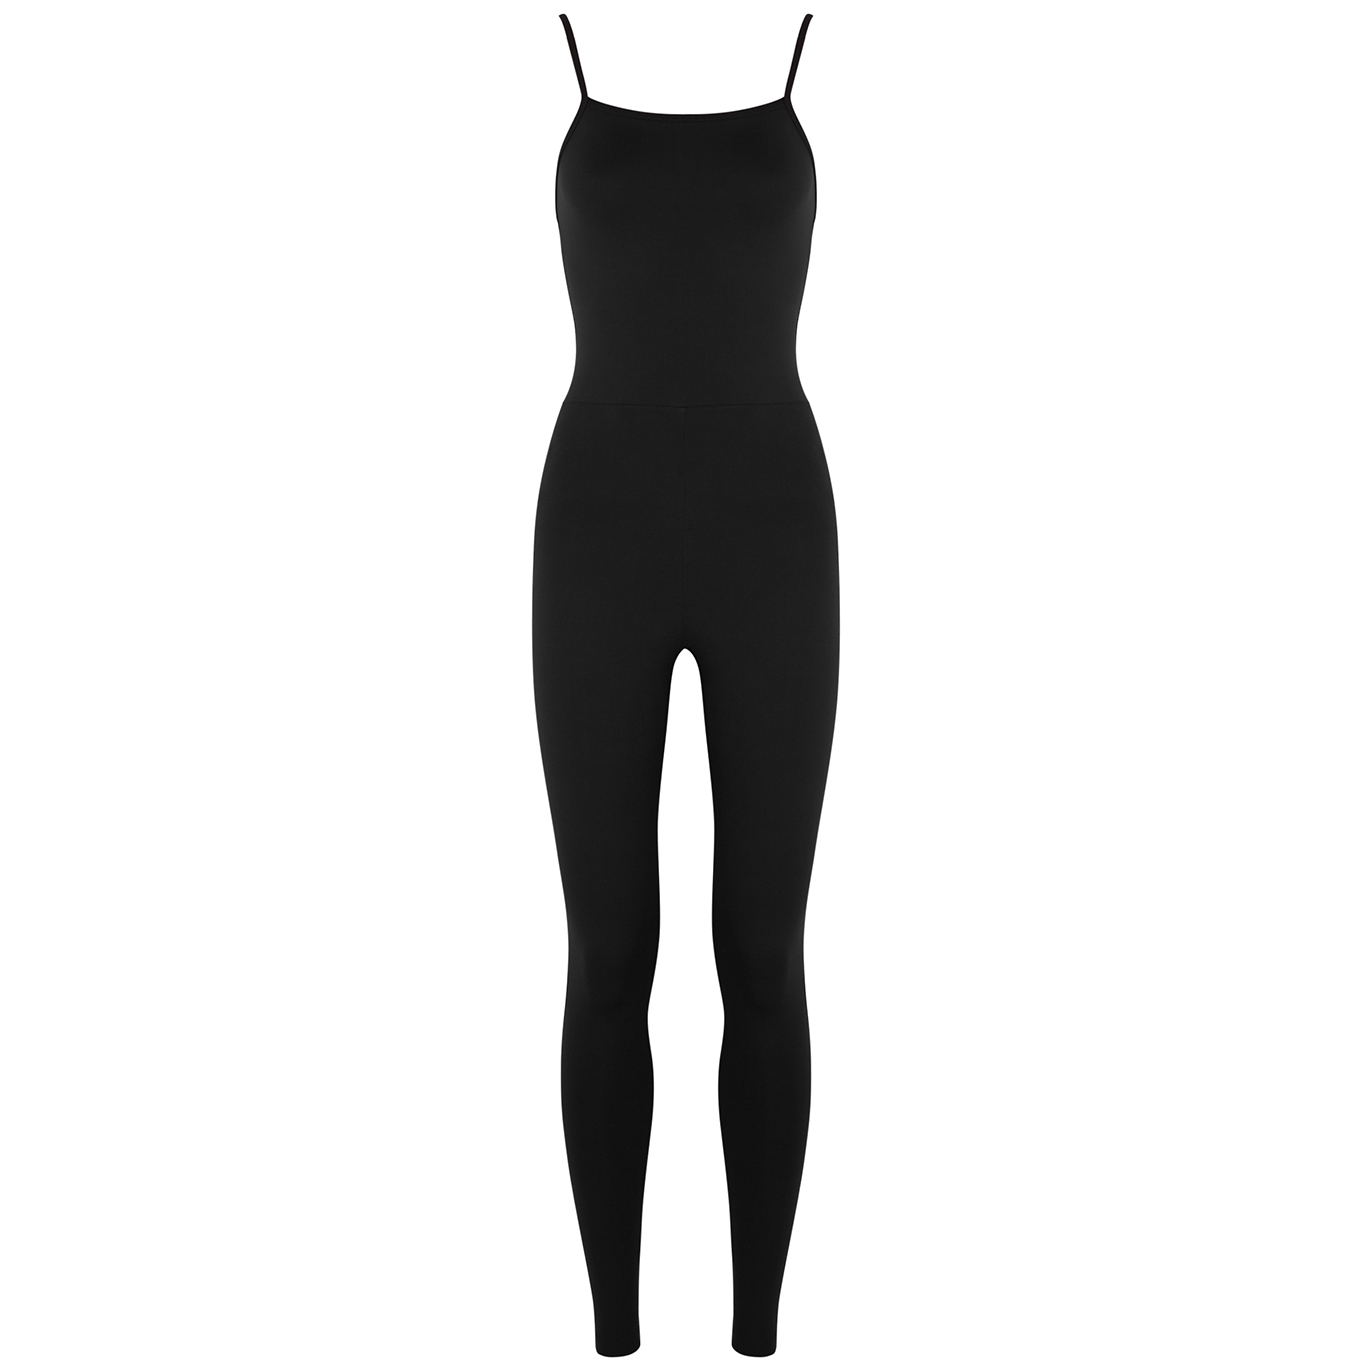 Girlfriend Collective The Unitard Black Jumpsuit - XL